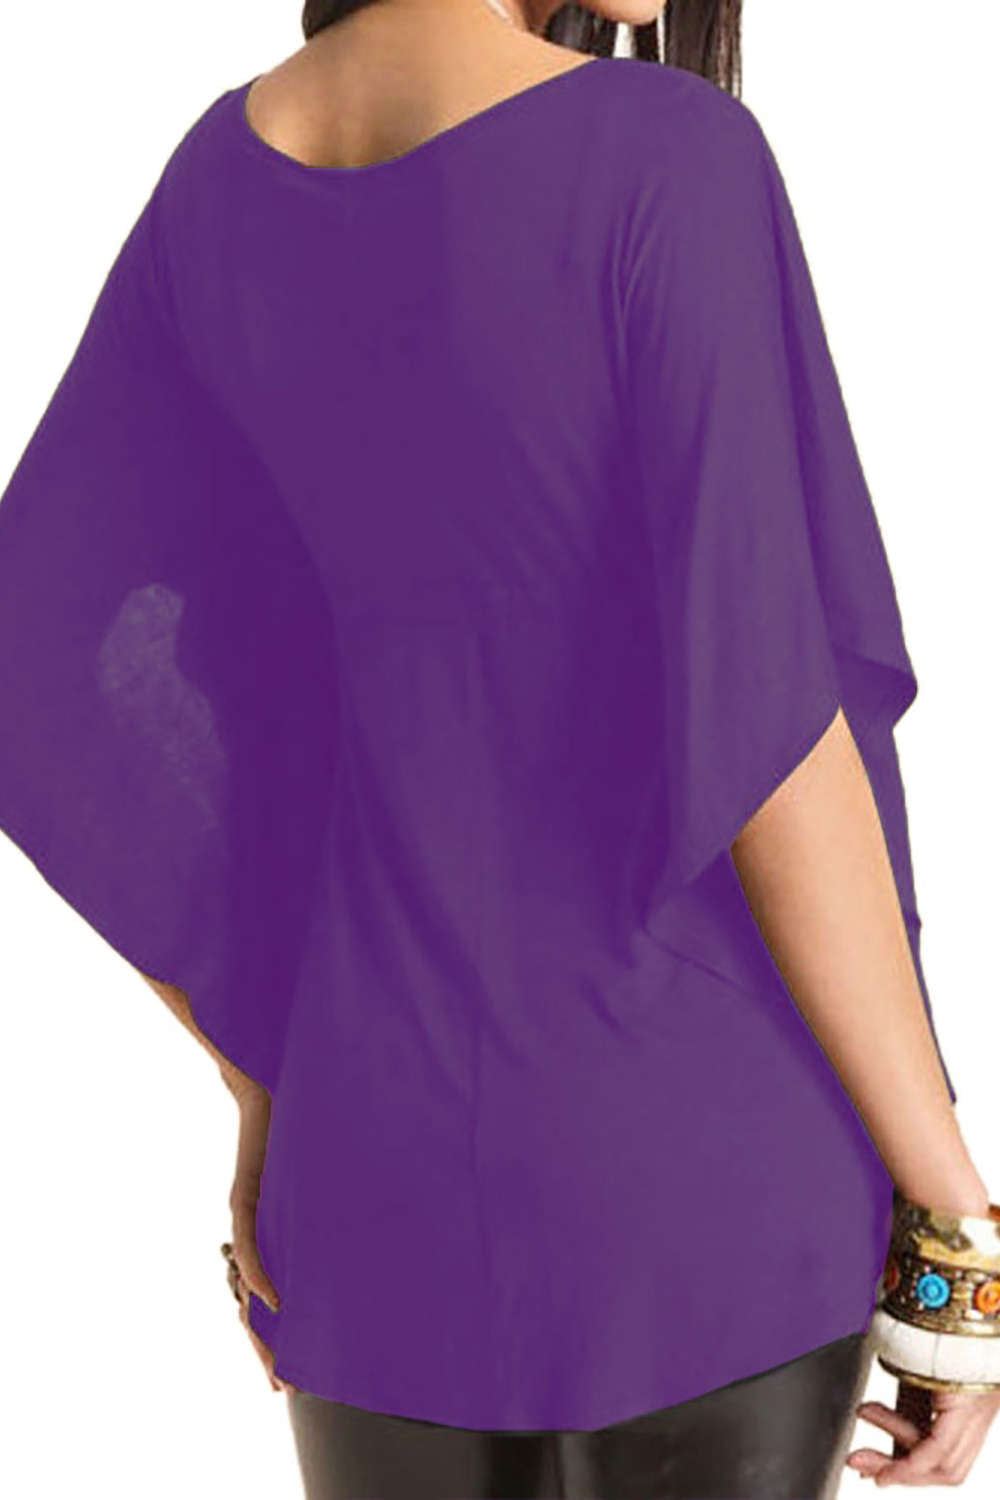 Iyasson Women's Plus Size Batwing Sleeve Tops